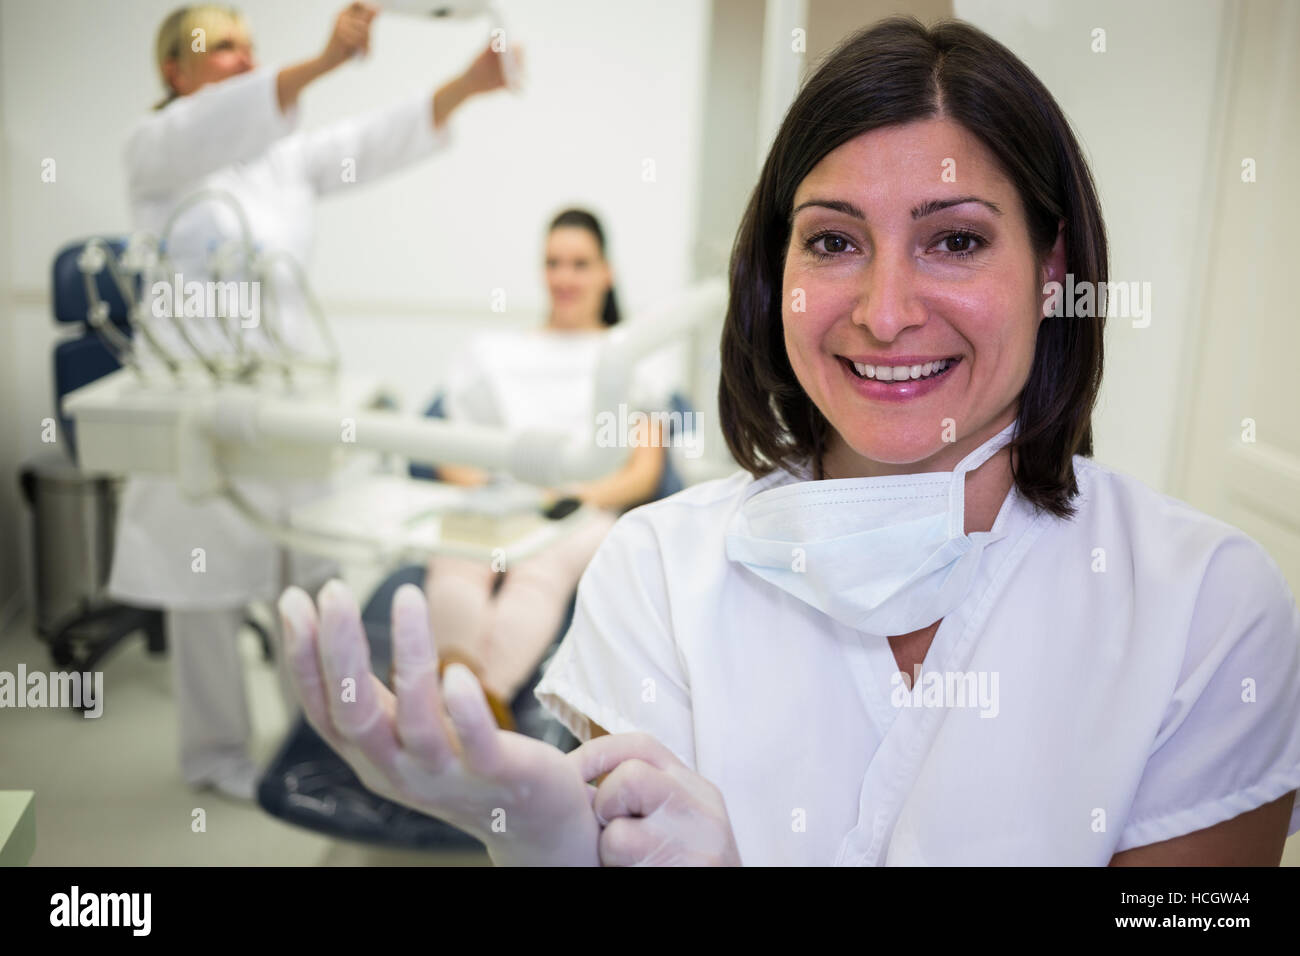 Lächelnde Zahnarzt OP-Handschuhe tragen Stockfotografie - Alamy